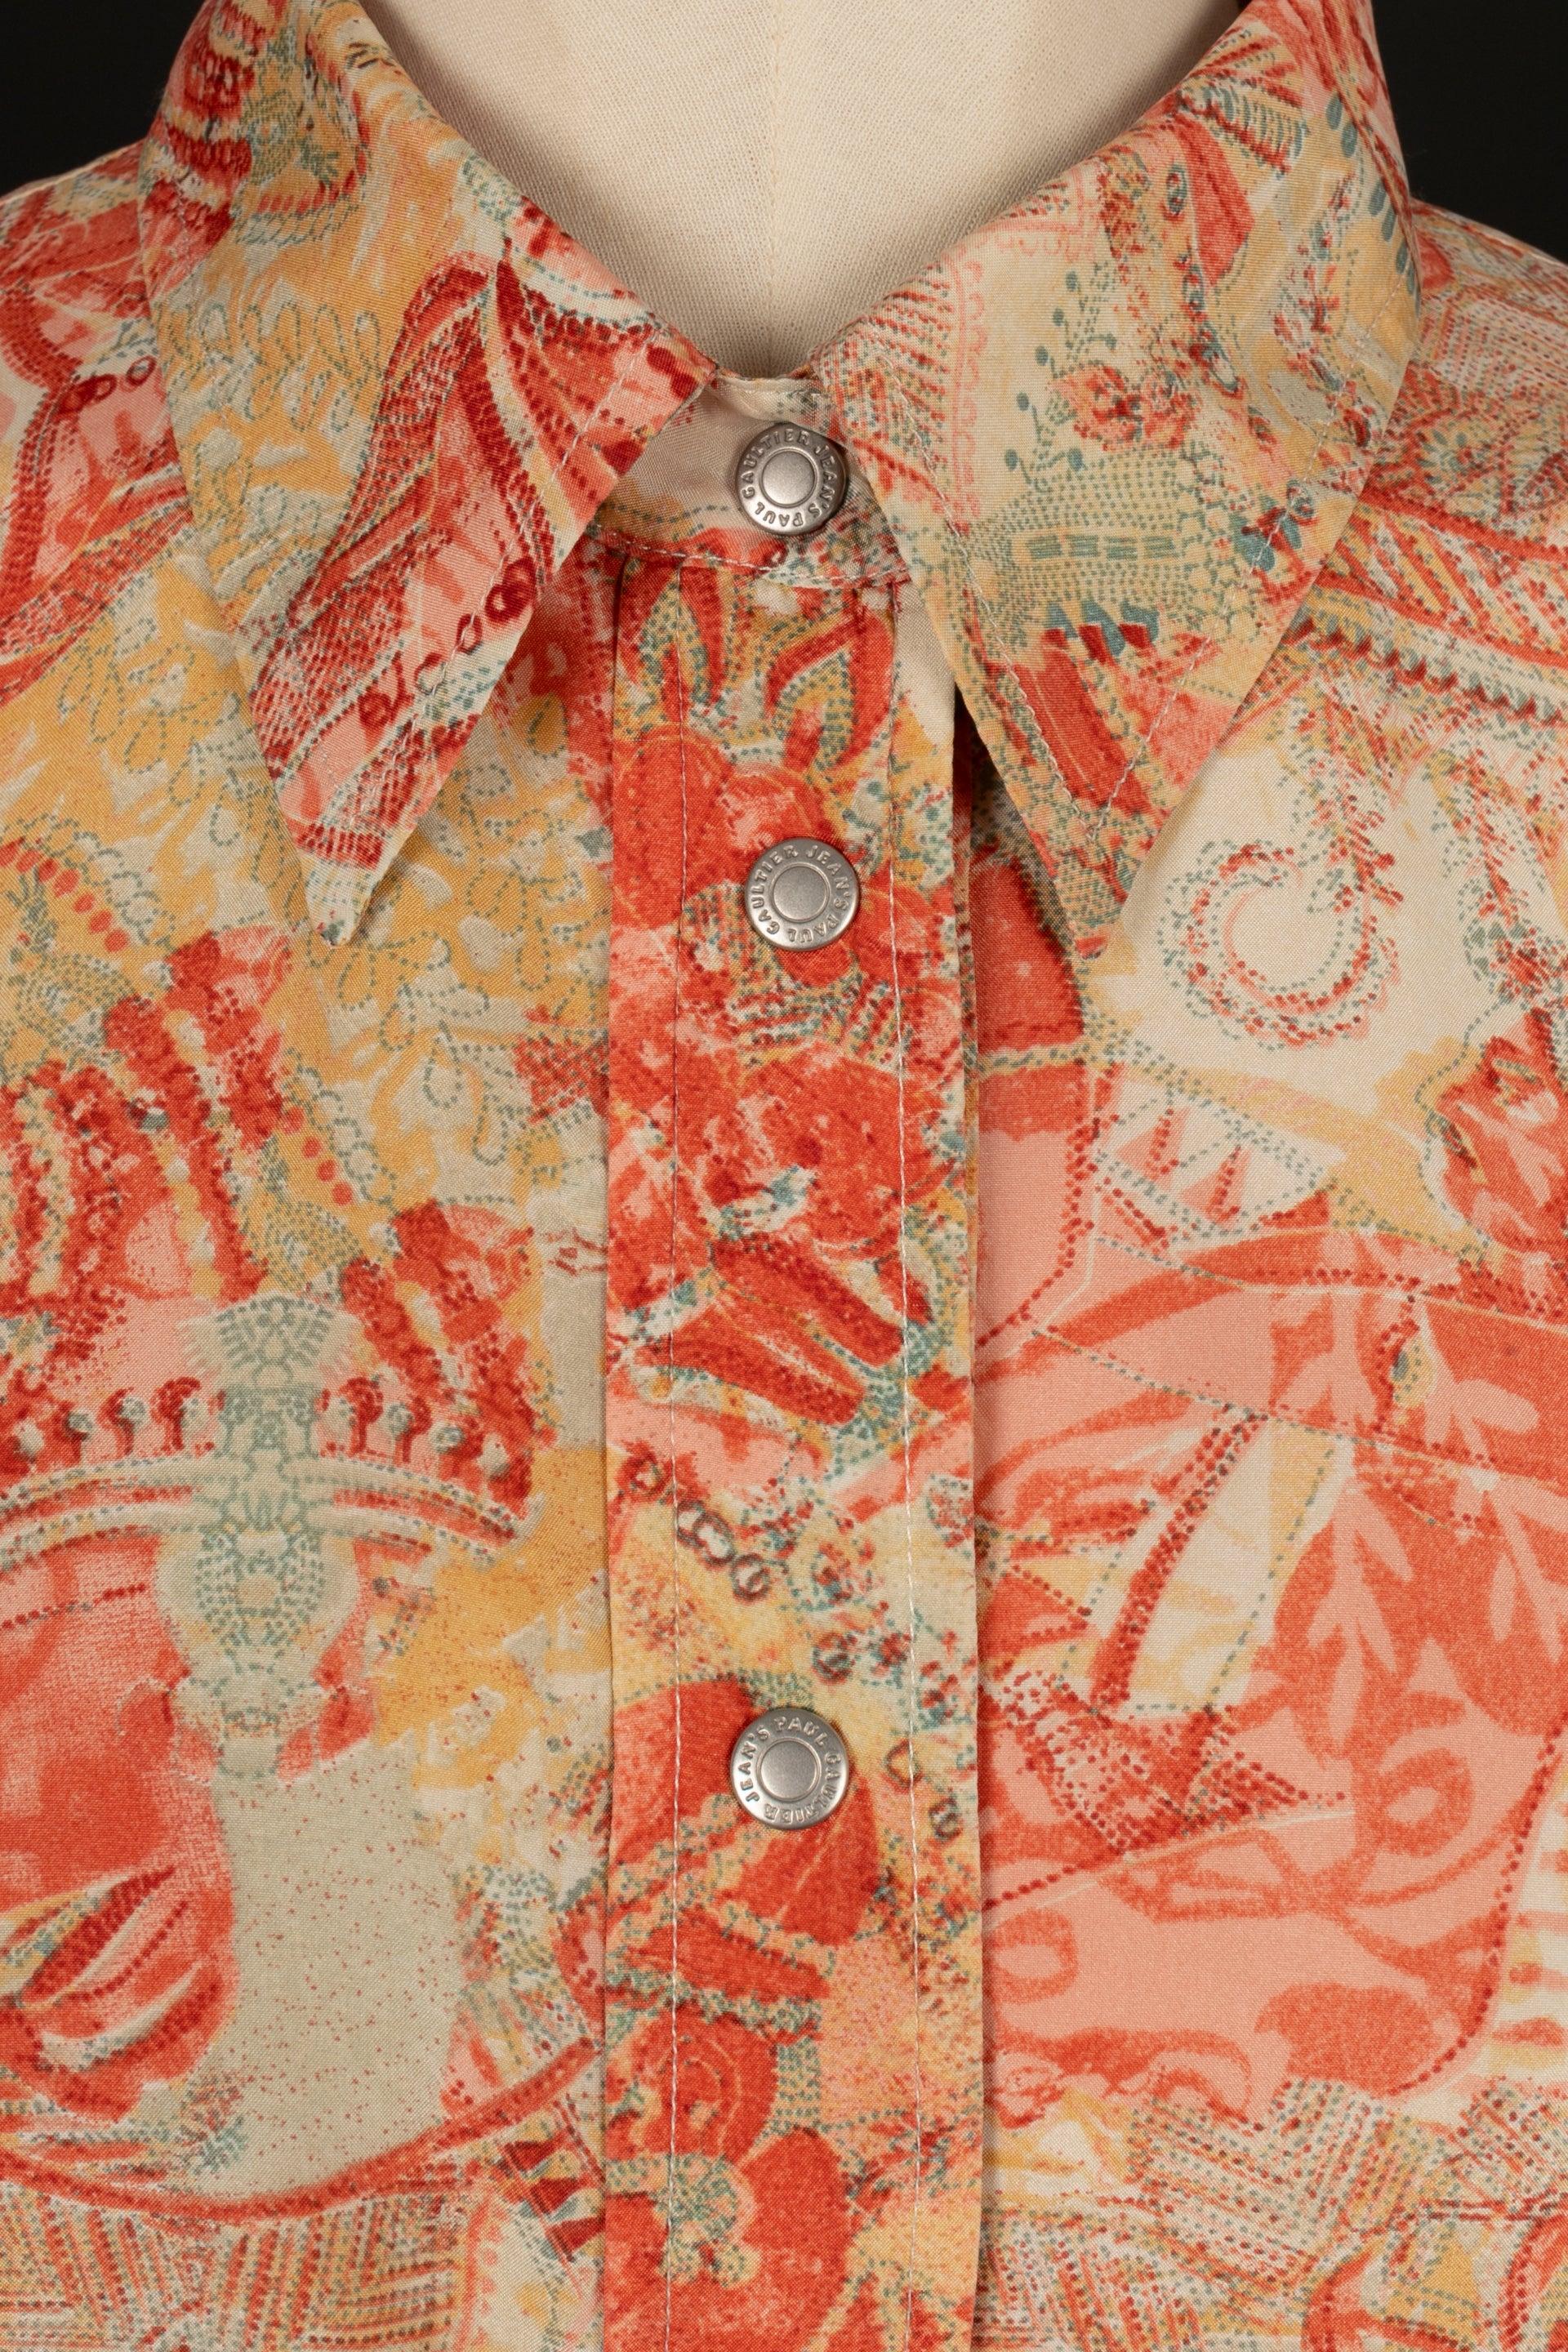 Jean Paul Gaultier Patterned Silk Shirt For Sale 1